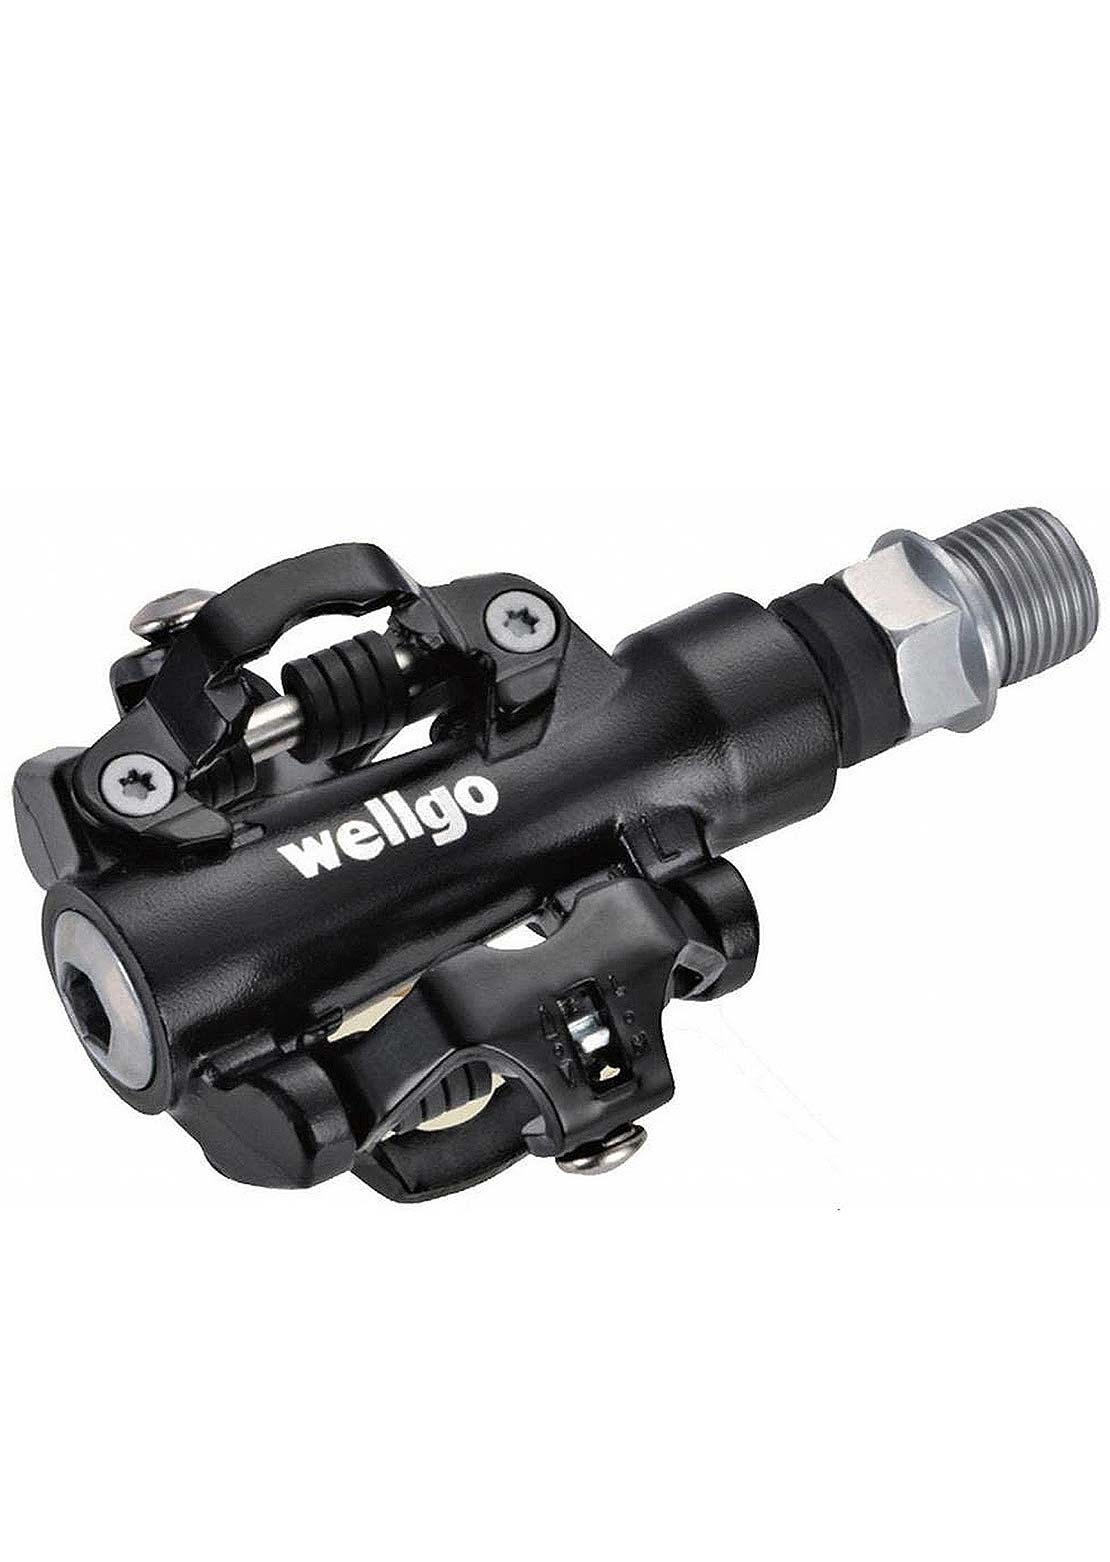 Wellgo M094 Clipless Pedal Black